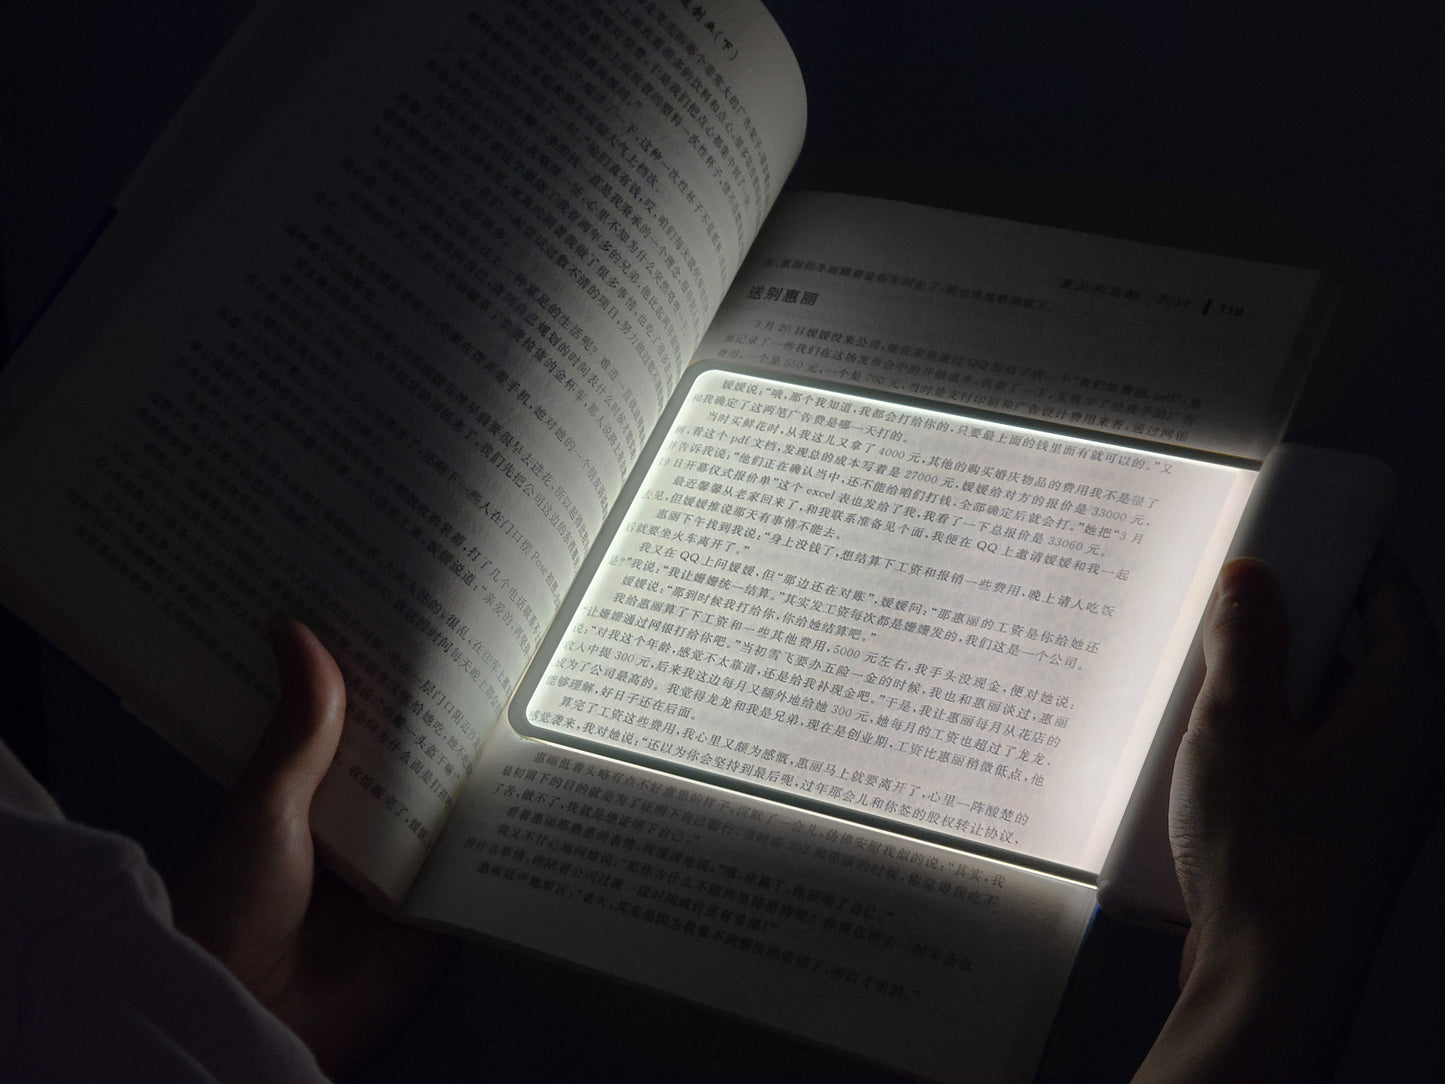 DASUNG Ming: the Ultimate Eye-Caring Night Reading Lamp